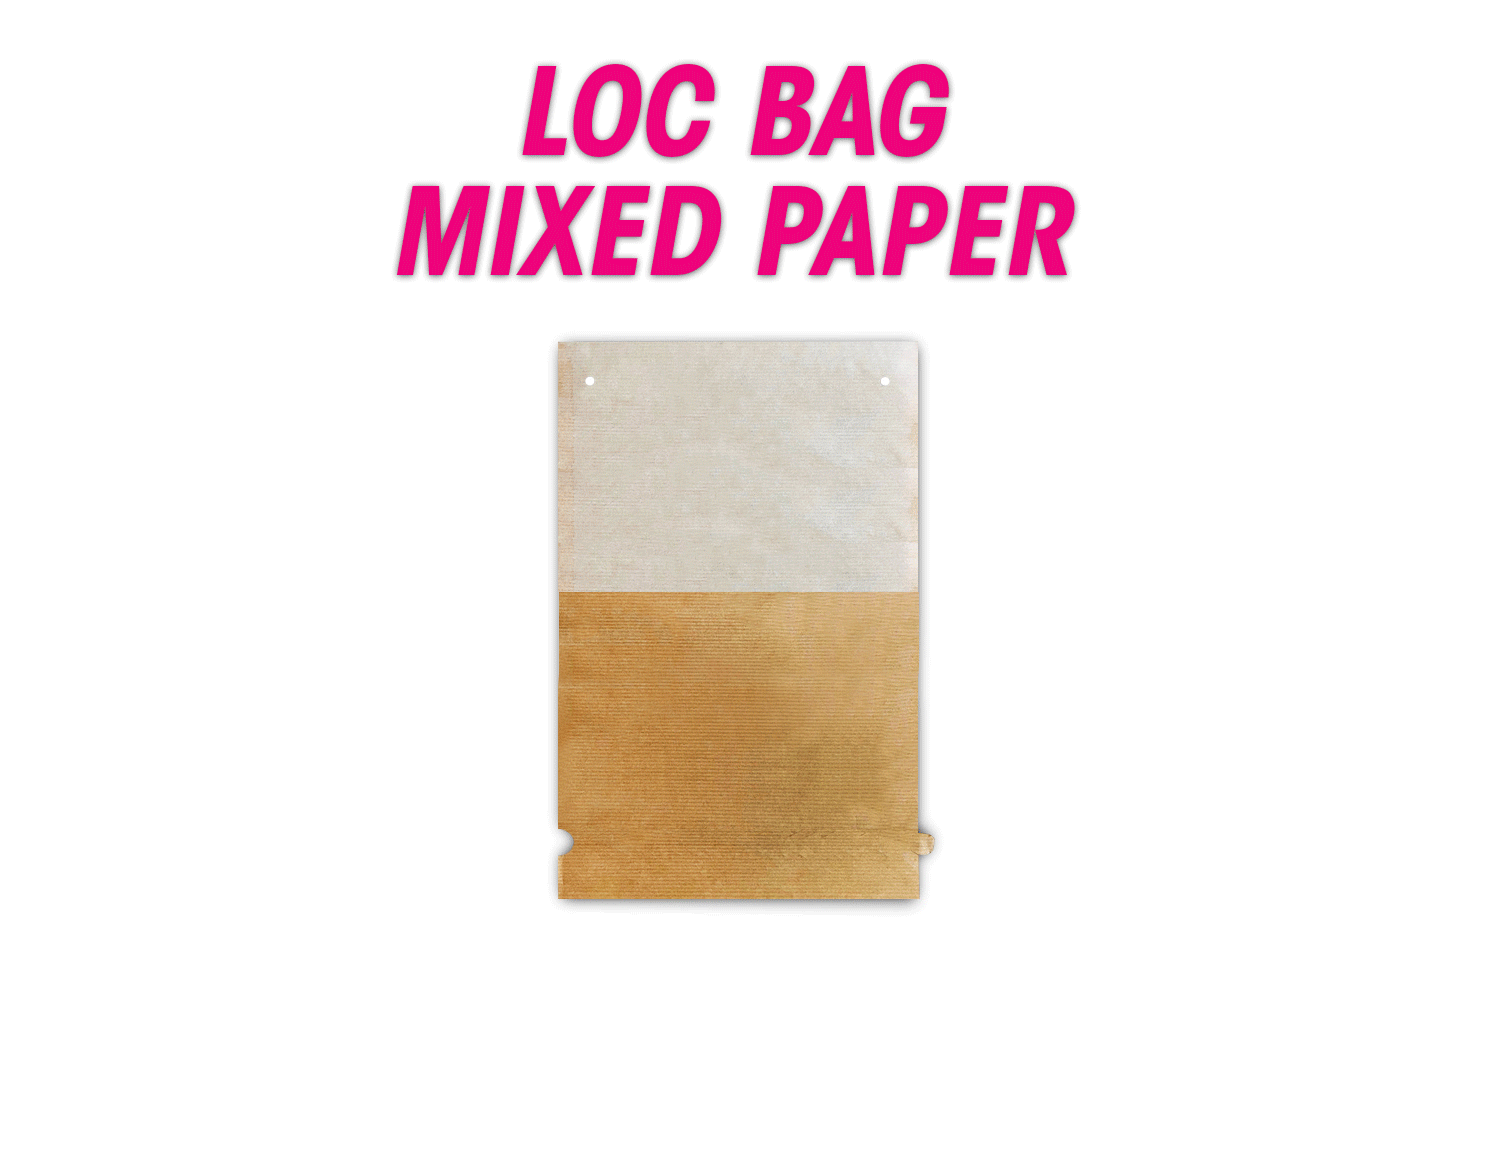 Loc Bag Mixed Paper und Send Bag lassen sich perfekt kombinieren